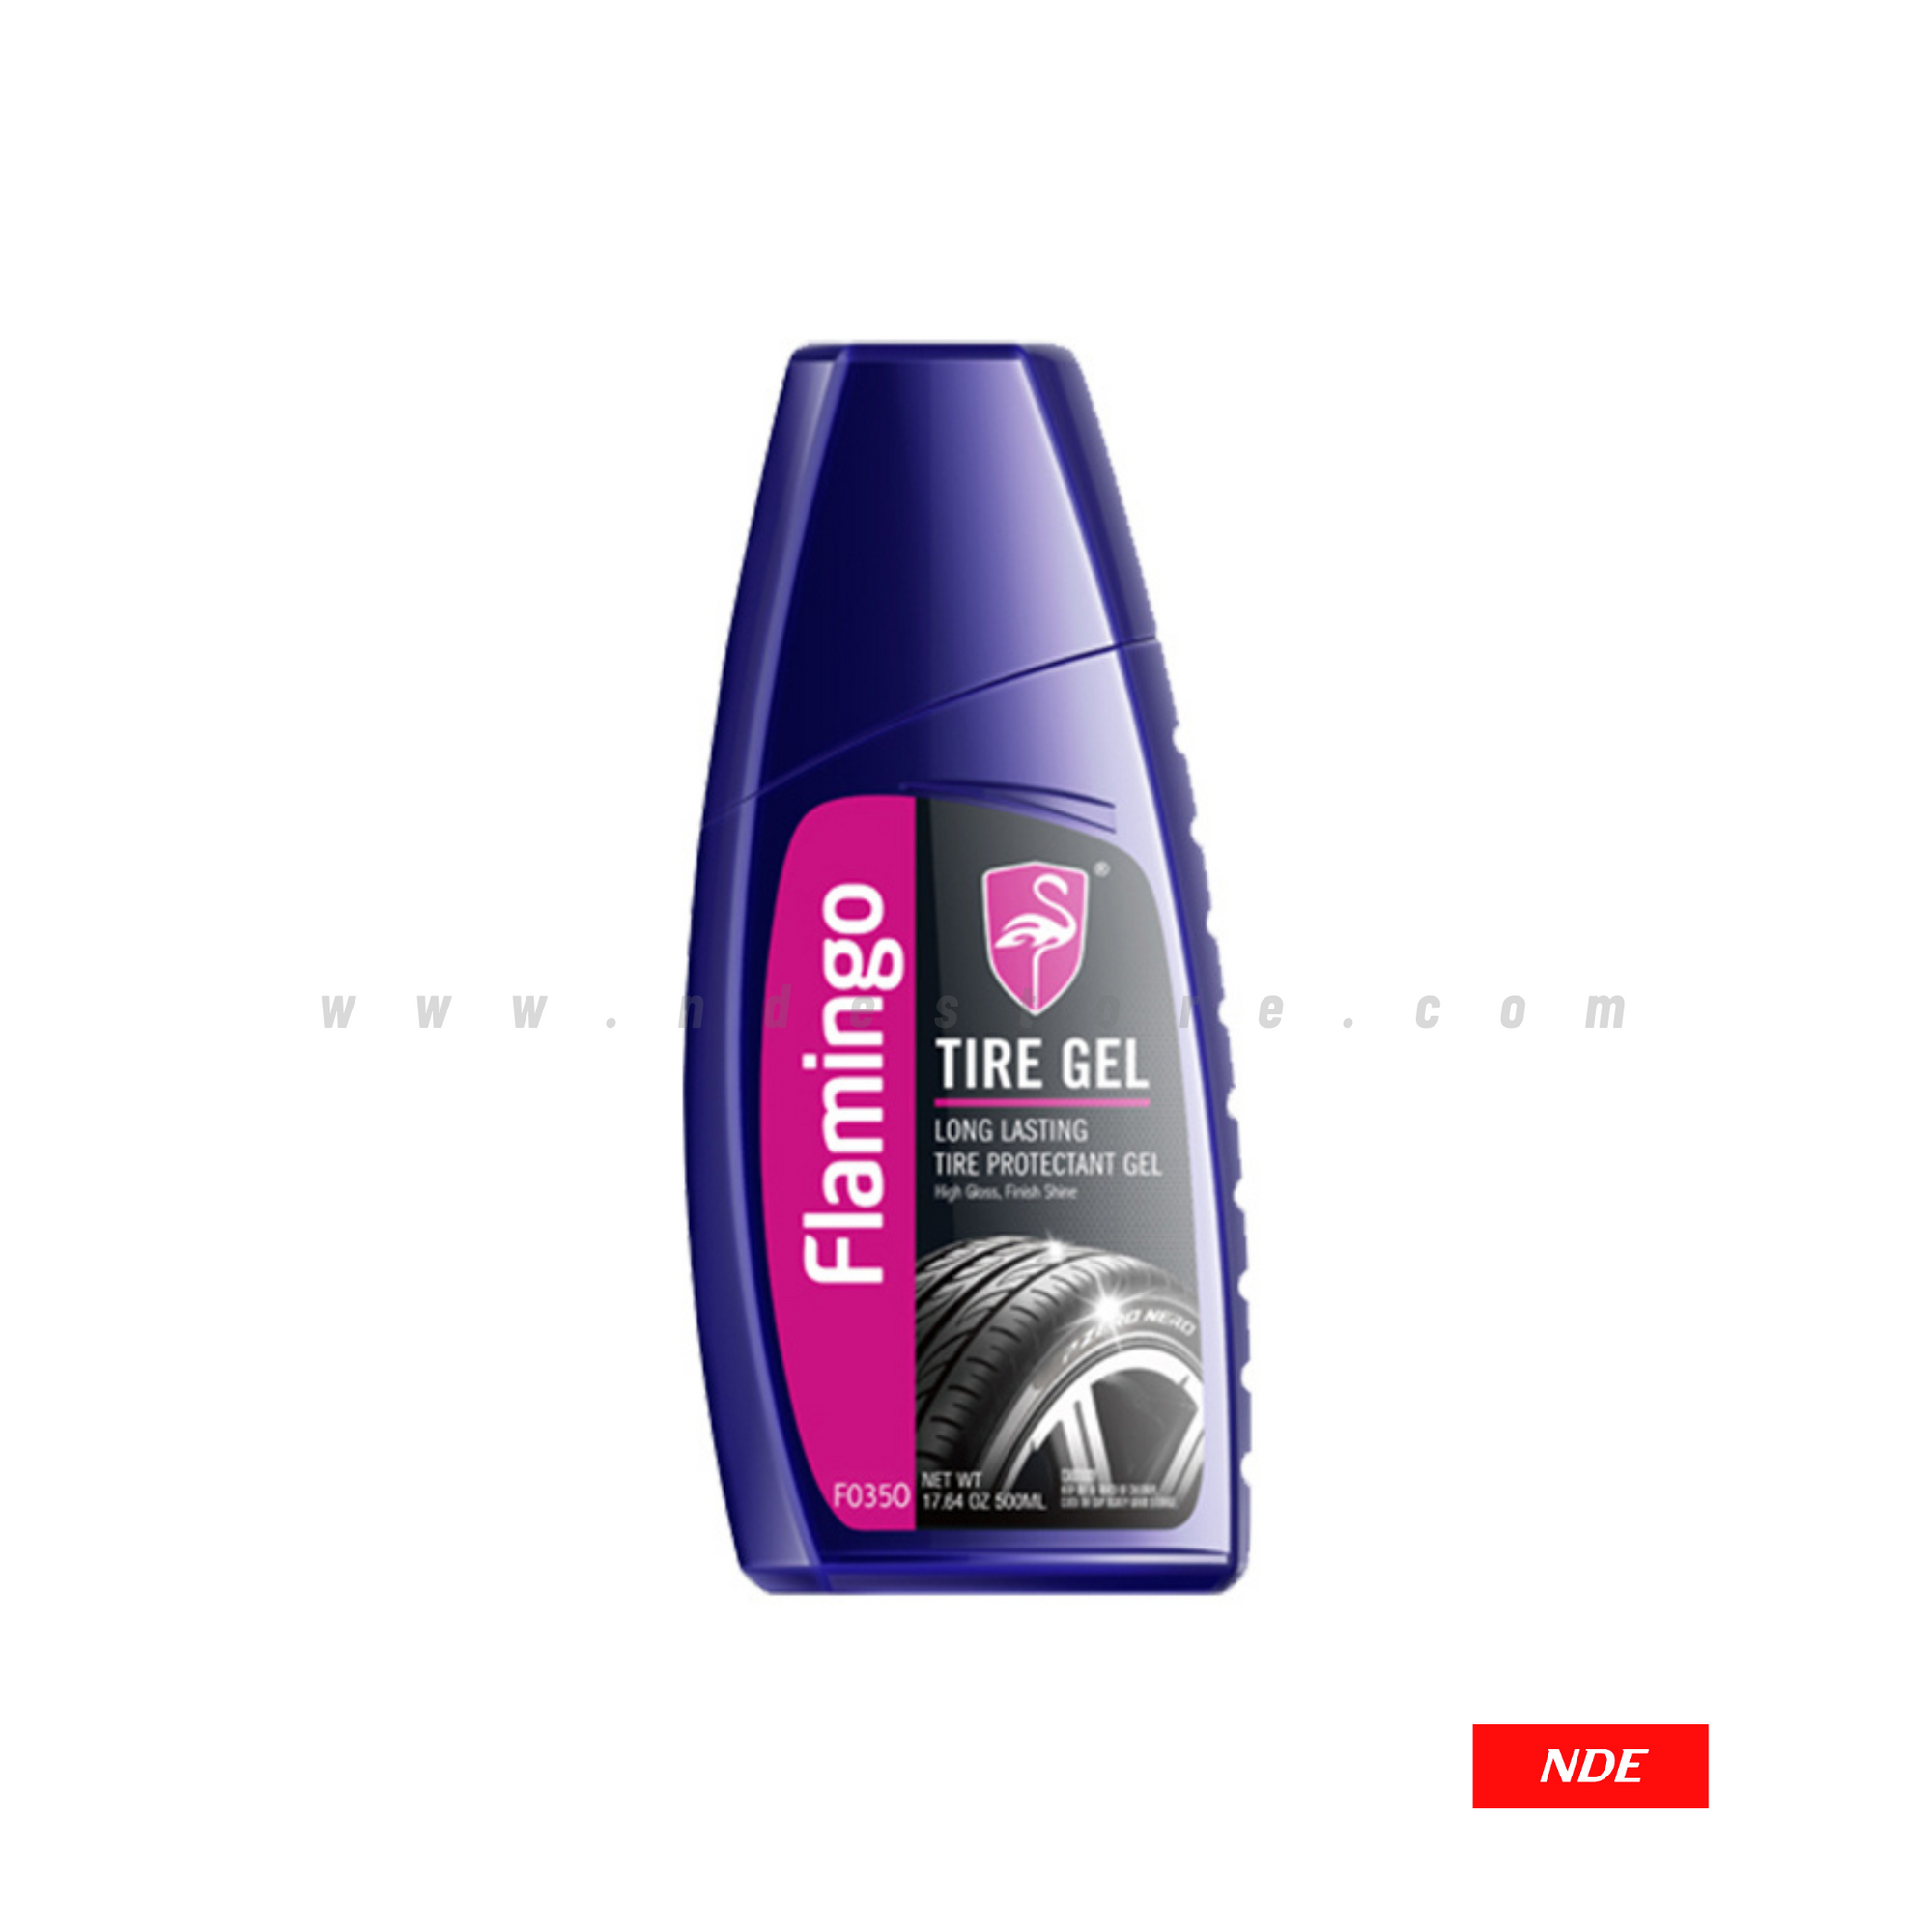 Formula 1 Carnauba Fast Wax Car Wax Spray – Carnauba Wax Car Polish for  High-Gloss Shine – Exterior Care Products for All Paint Finishes – Easy to  Use